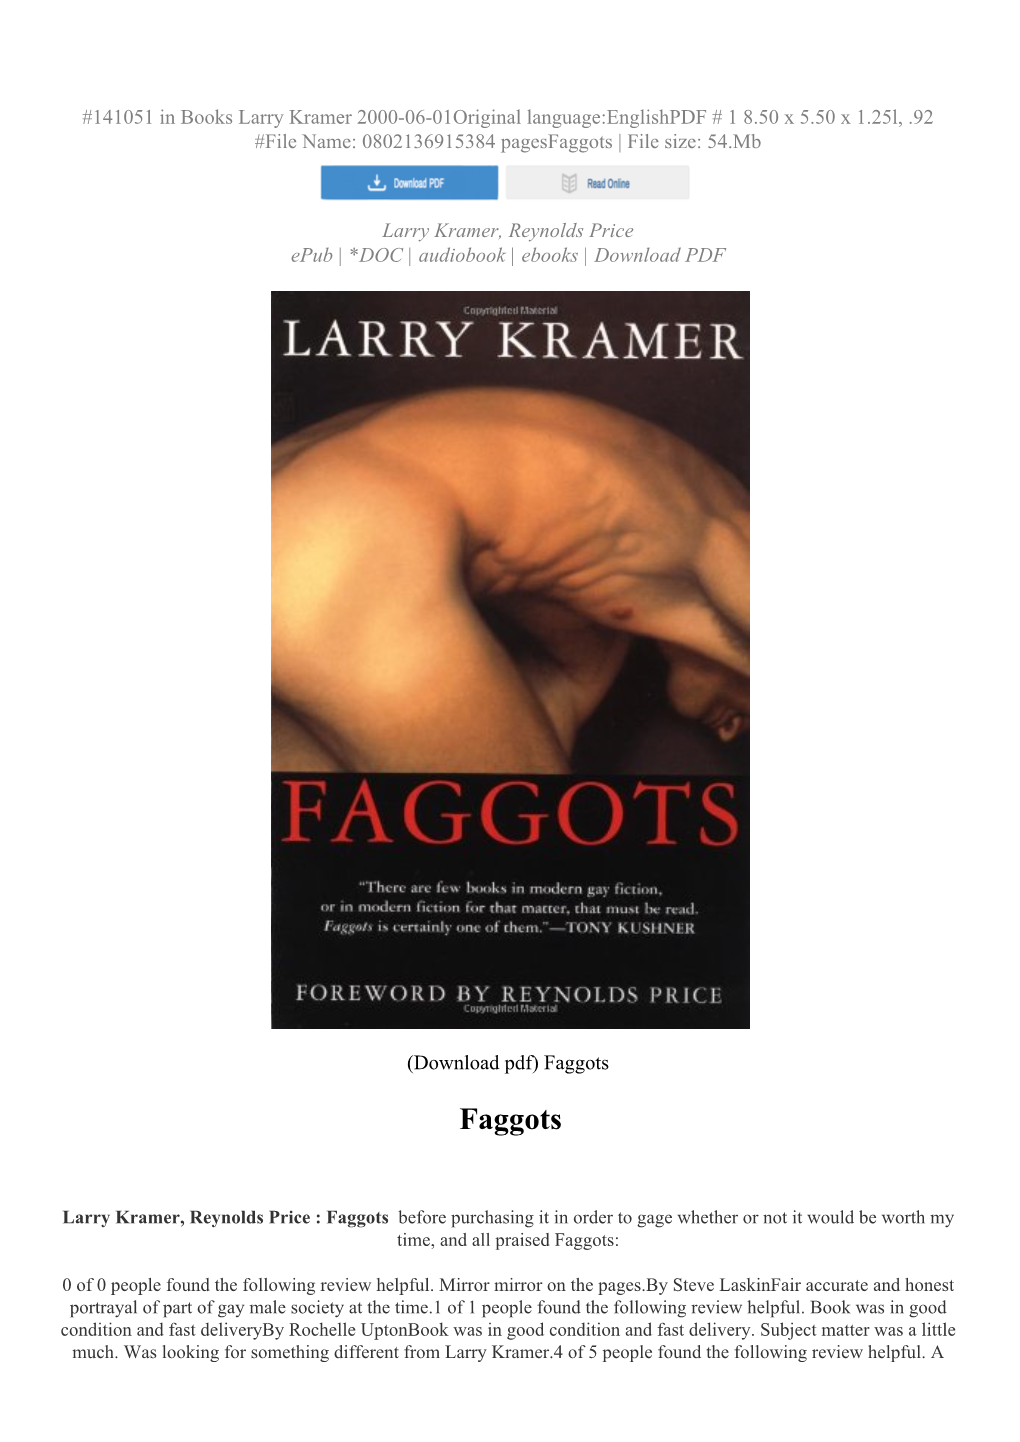 Faggots | File Size: 54.Mb